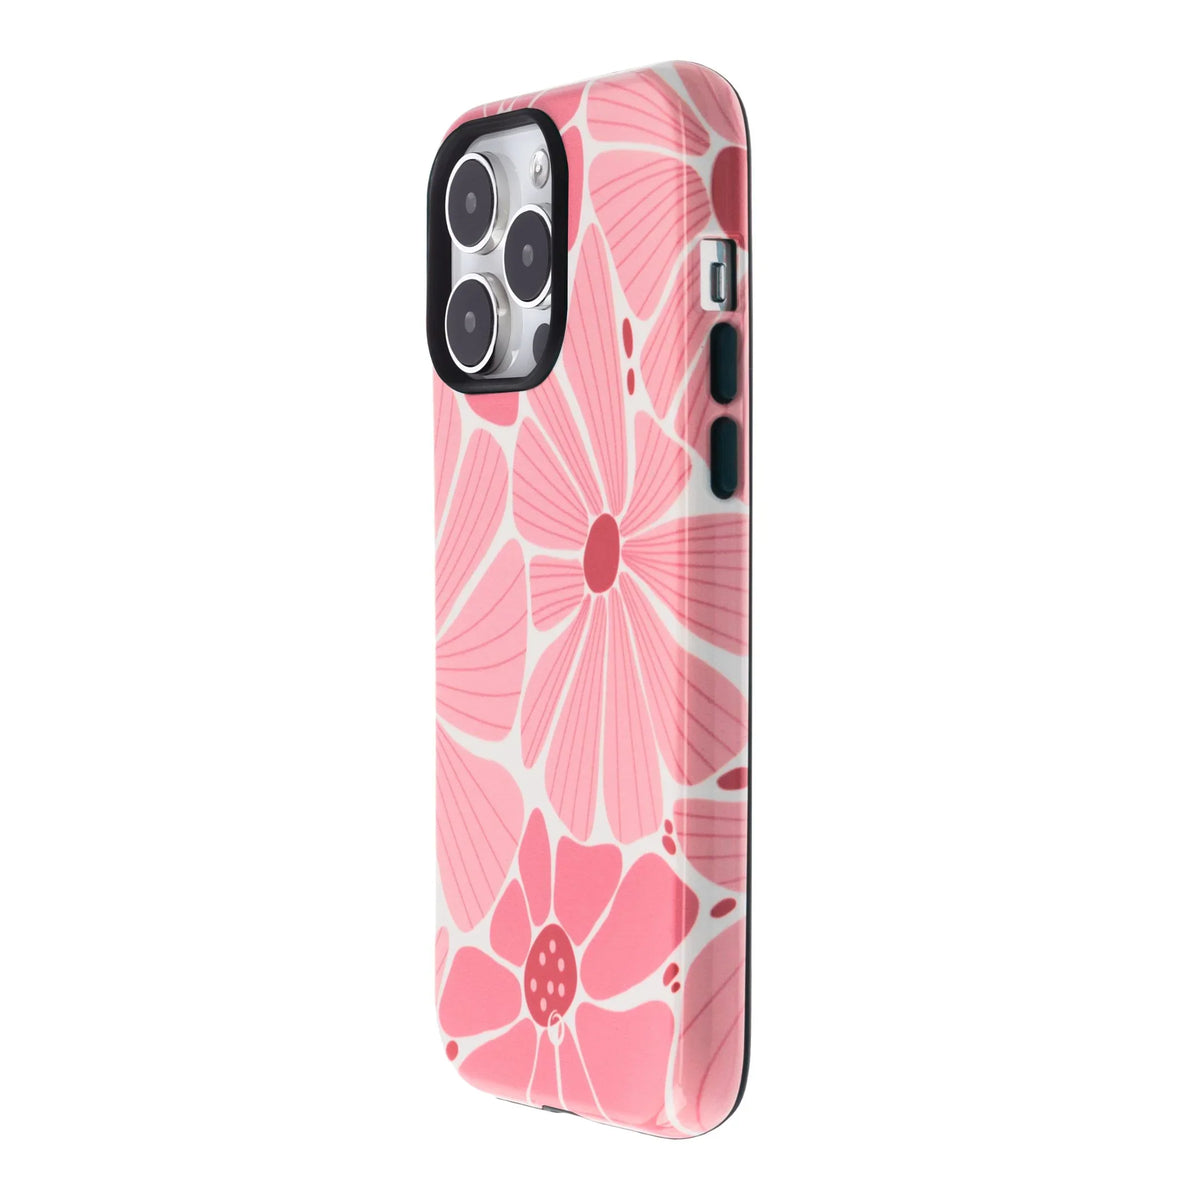 Floral Blast iPhone Case - iPhone 12 Pro